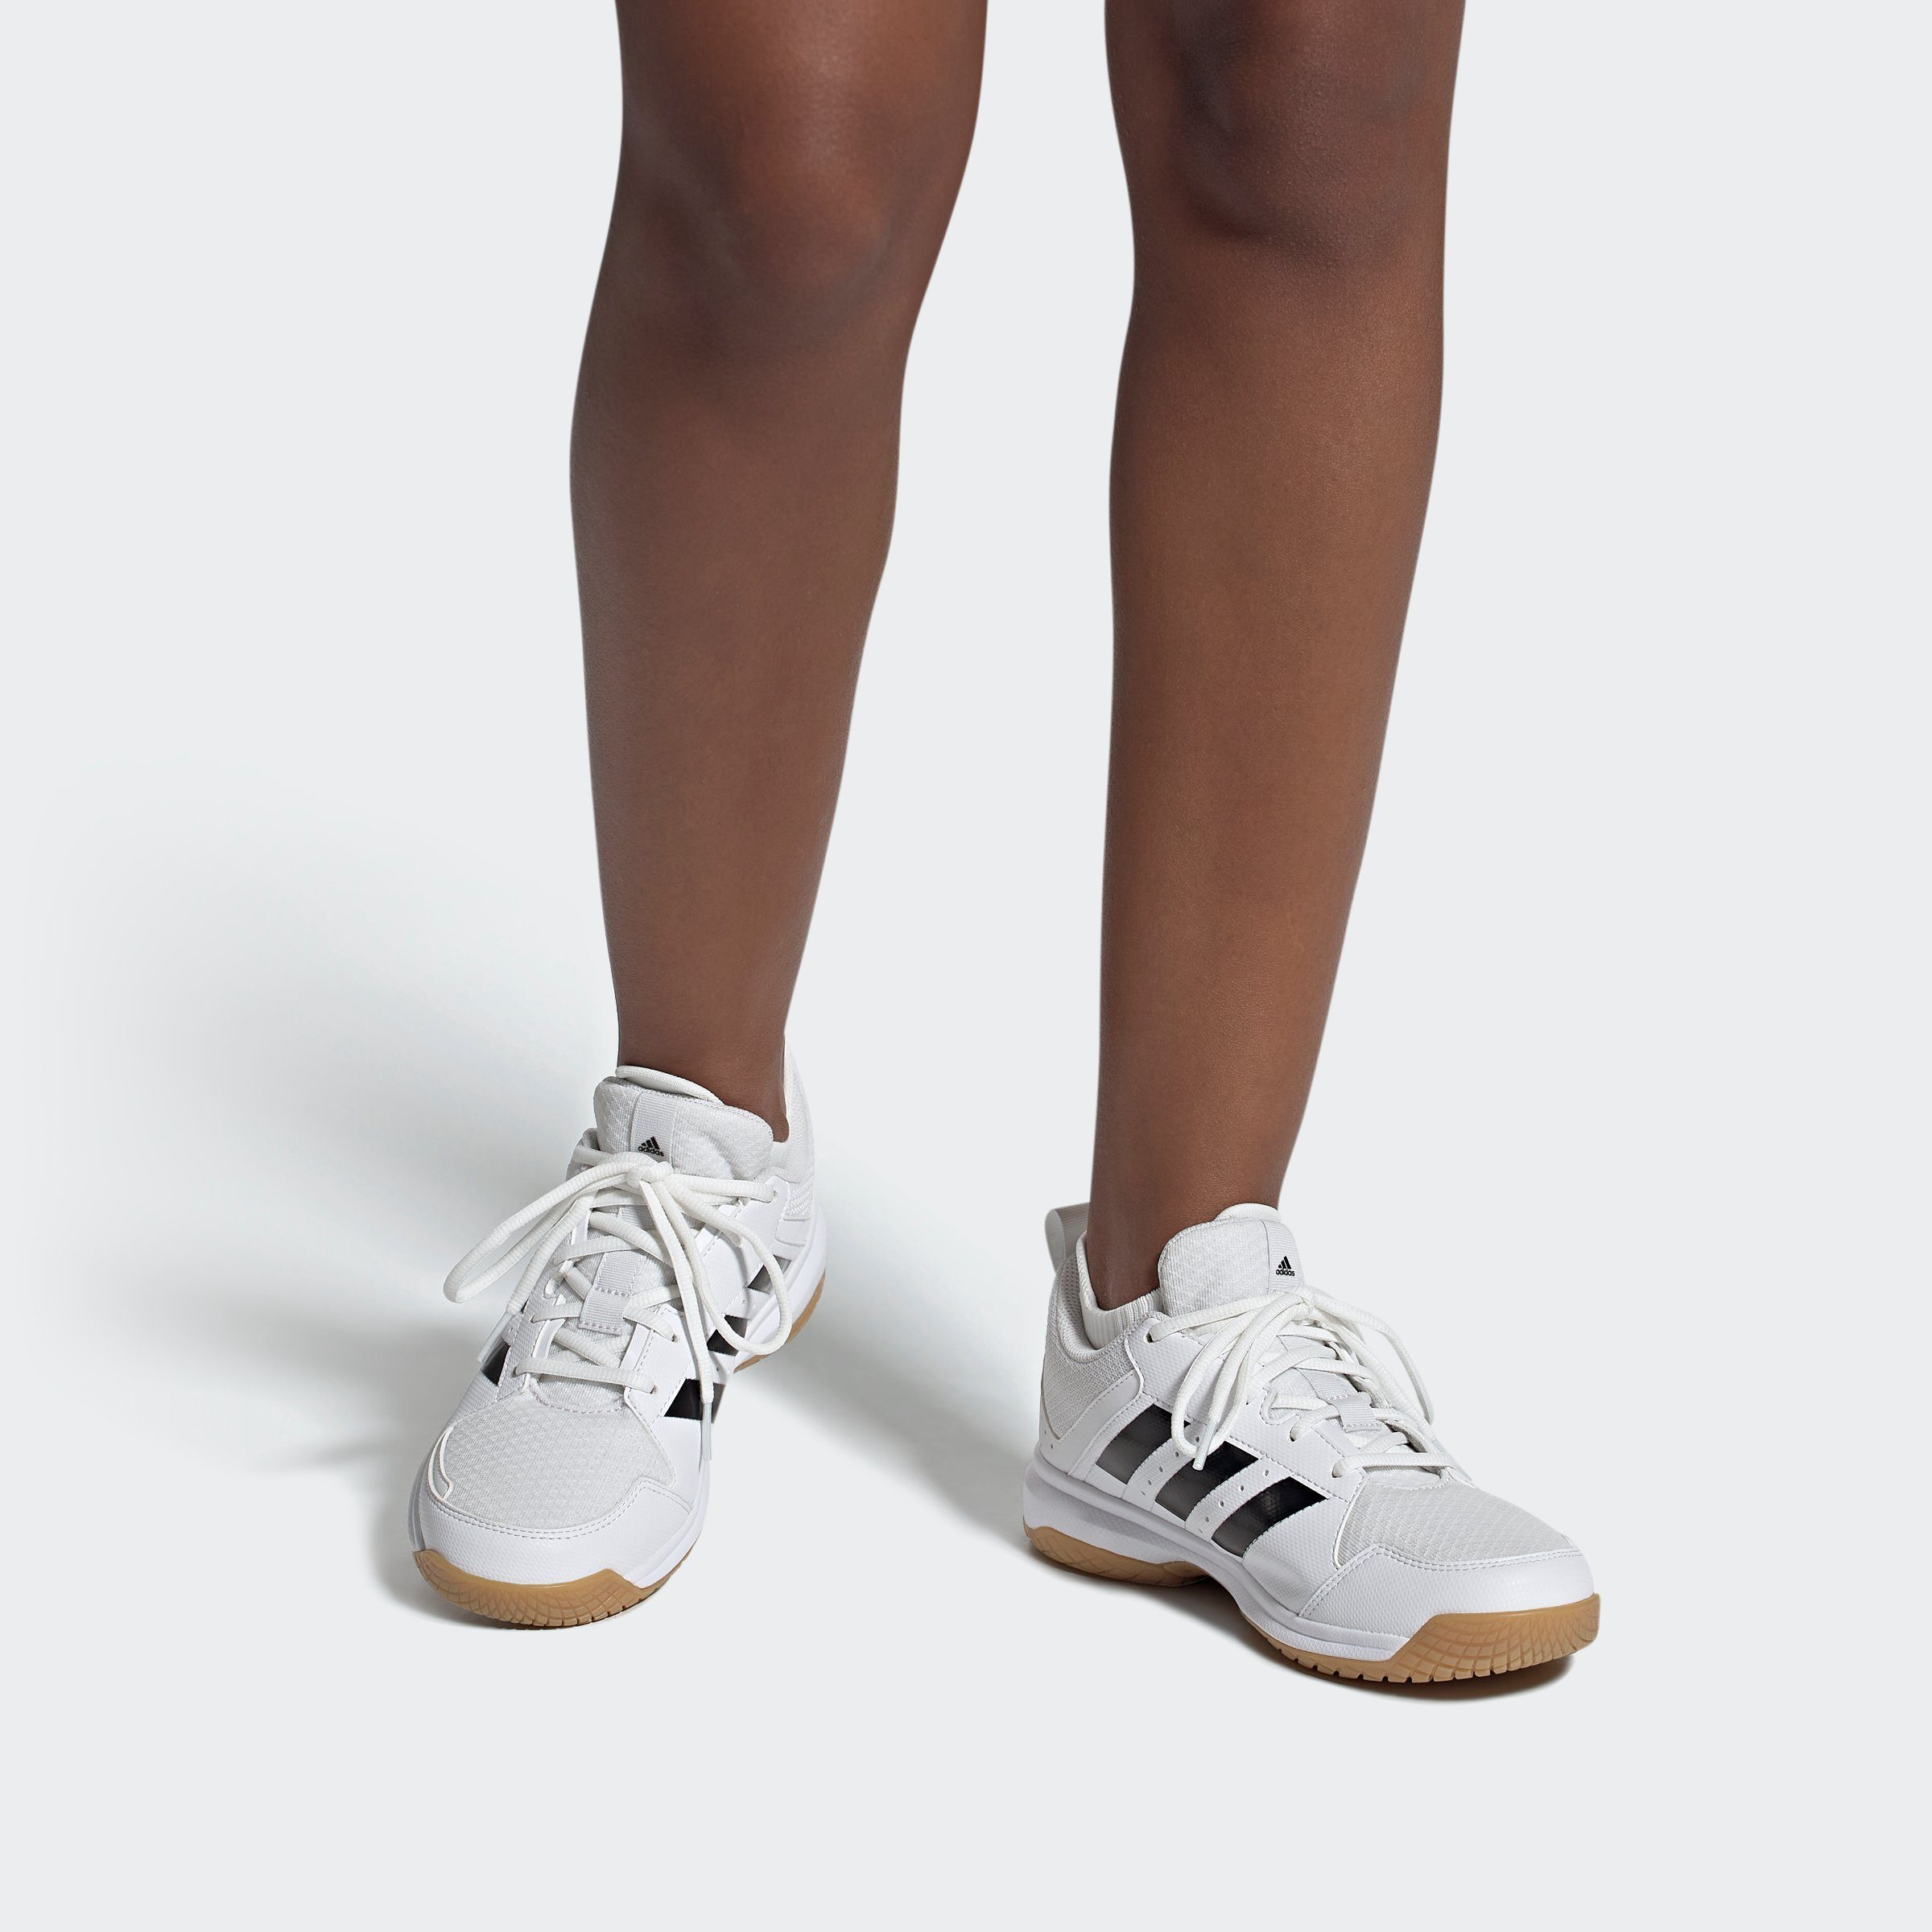 weiß-schwarz 7 Performance adidas INDOOR LIGRA Handballschuh